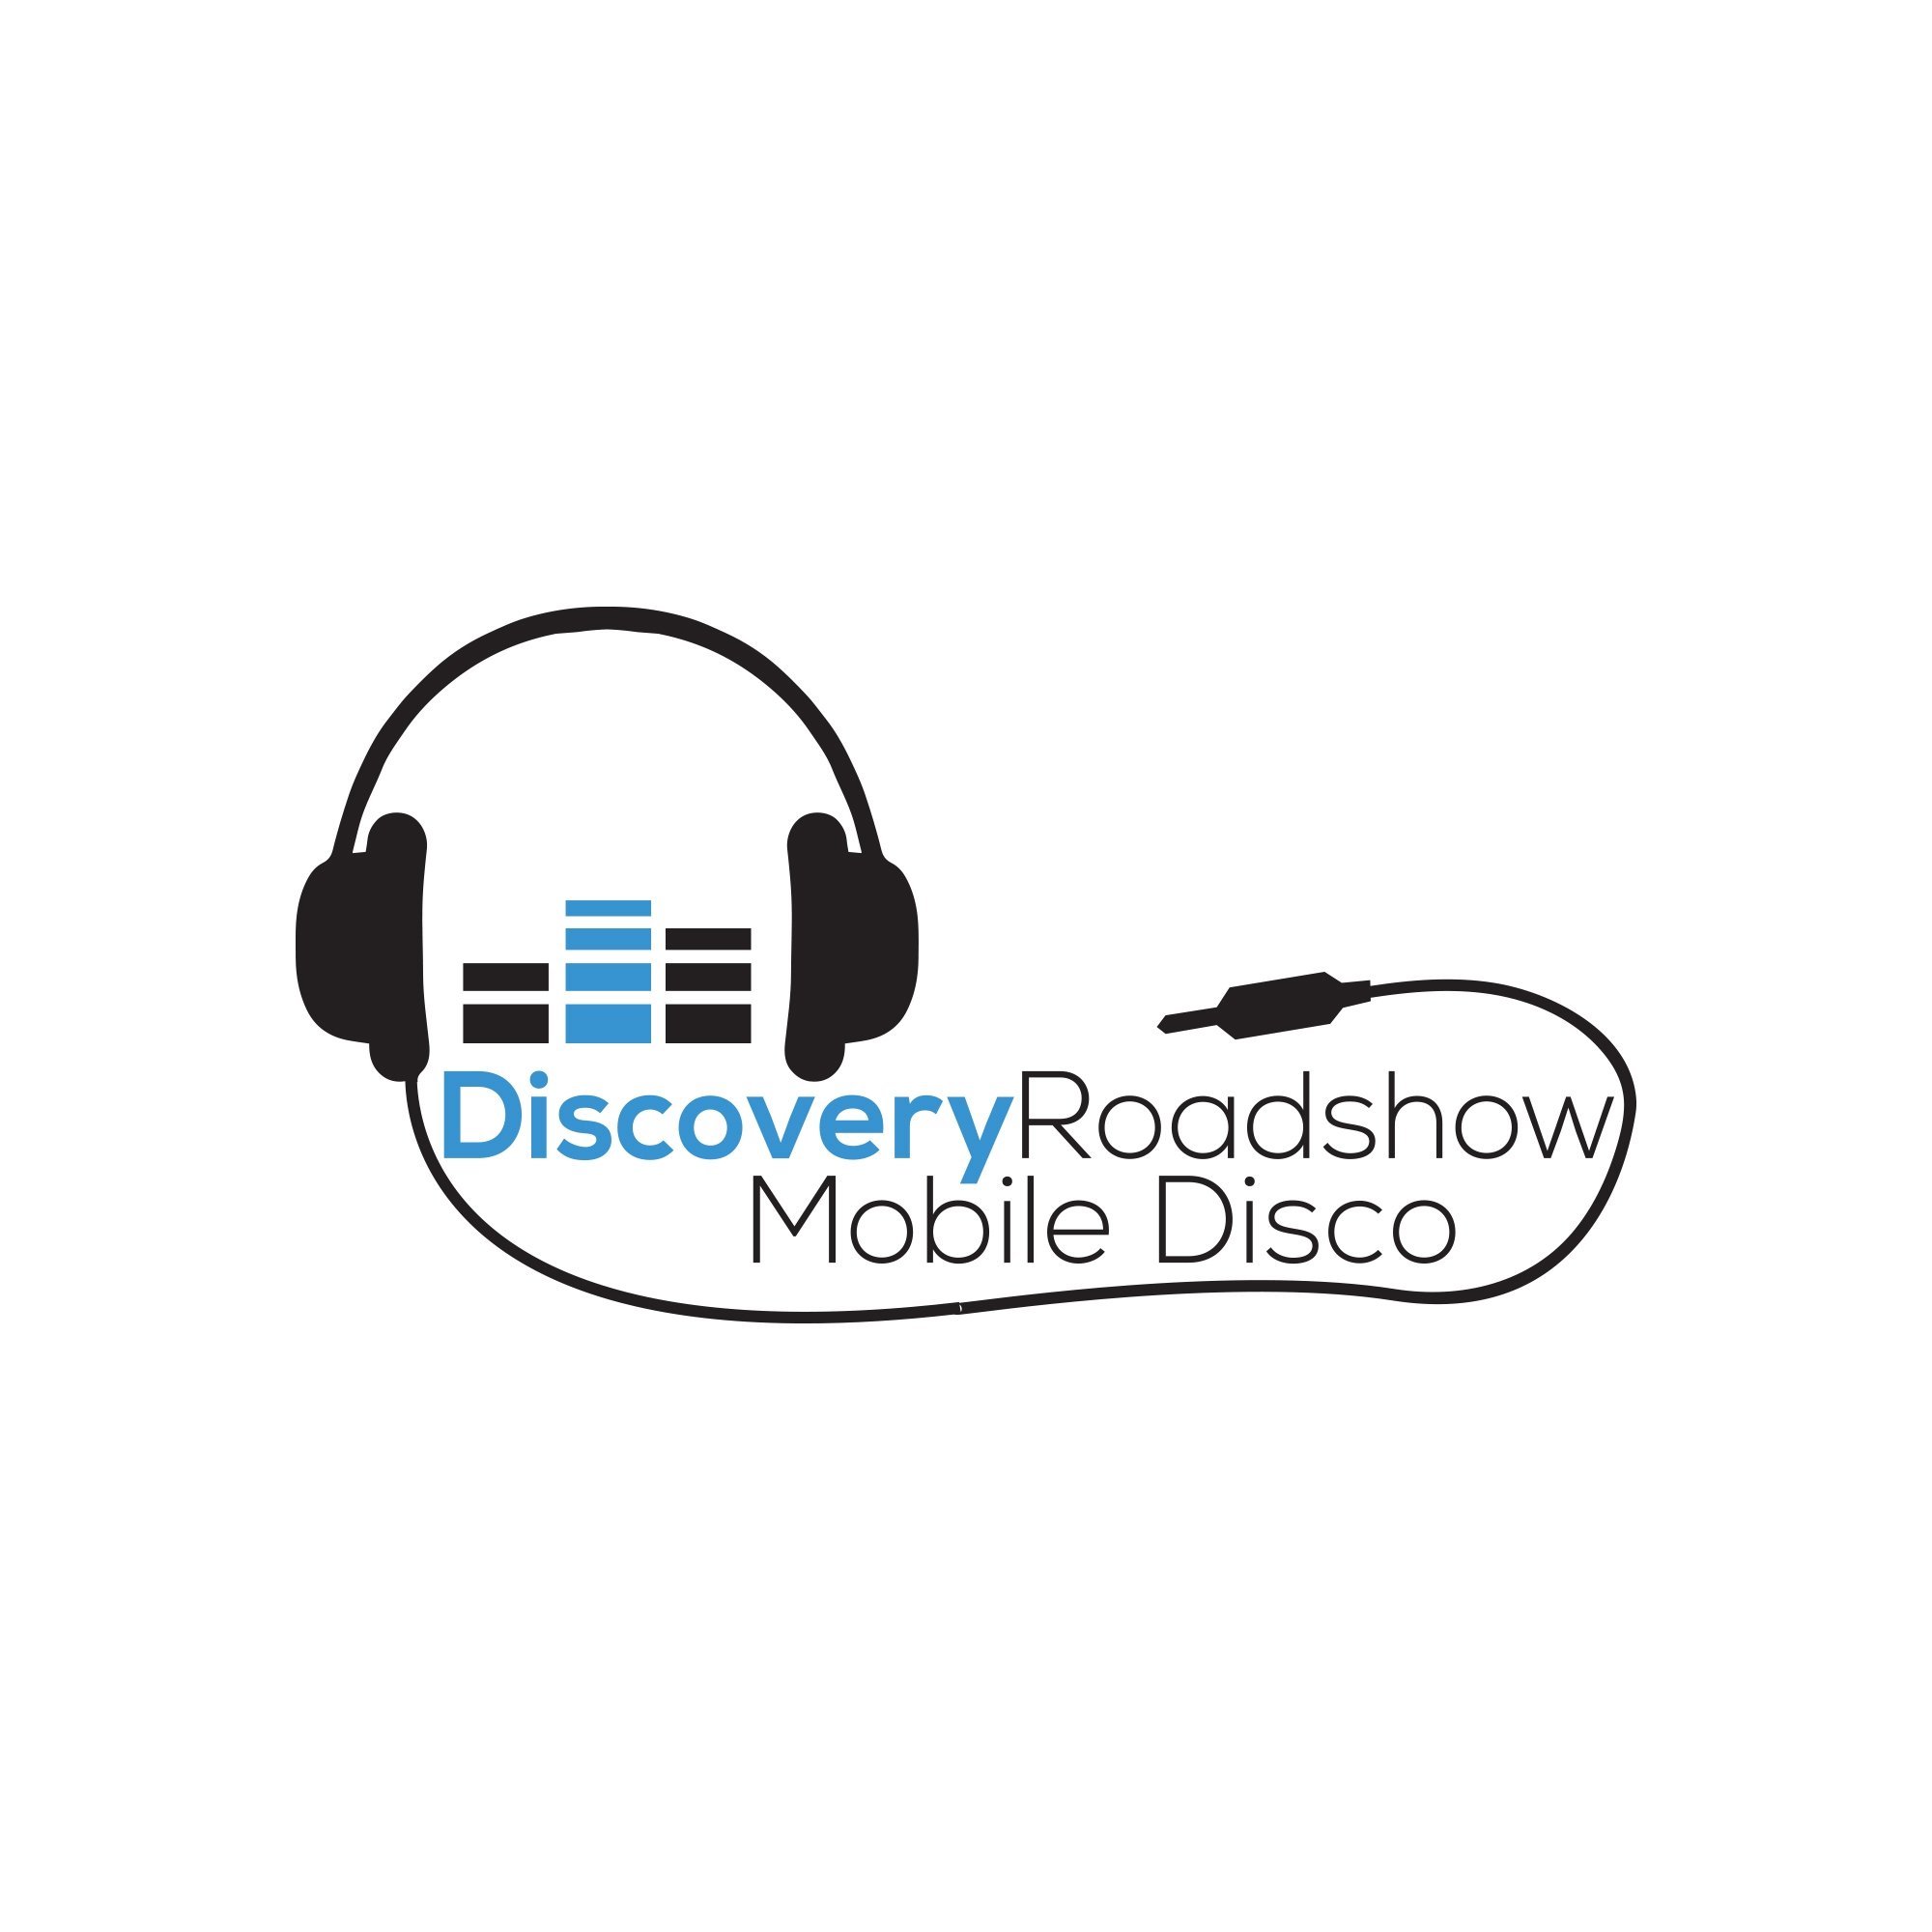 Discovery Roadshow Mobile Disco